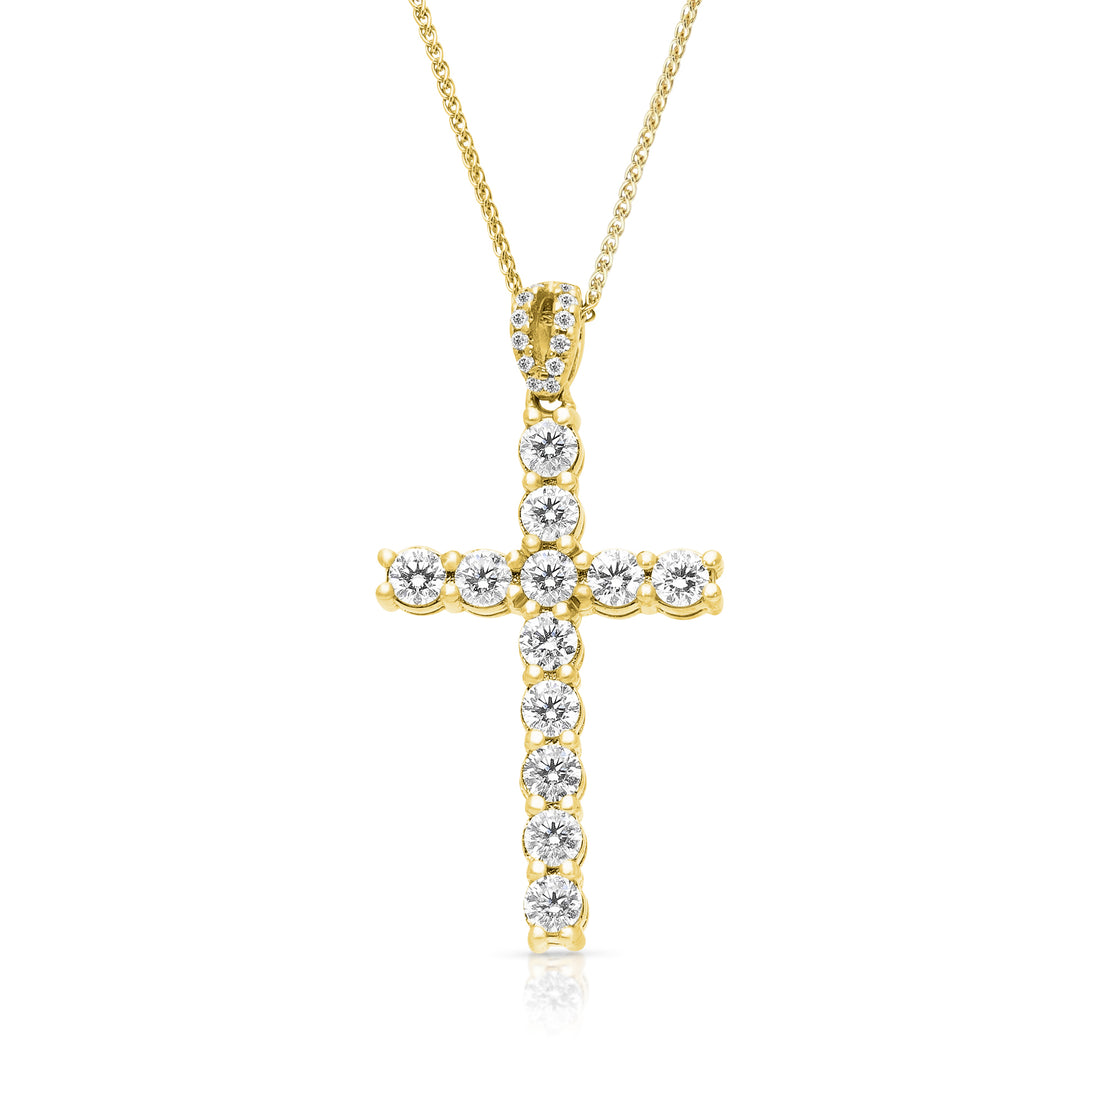 Diamond Cross Pendant - .85 Carat